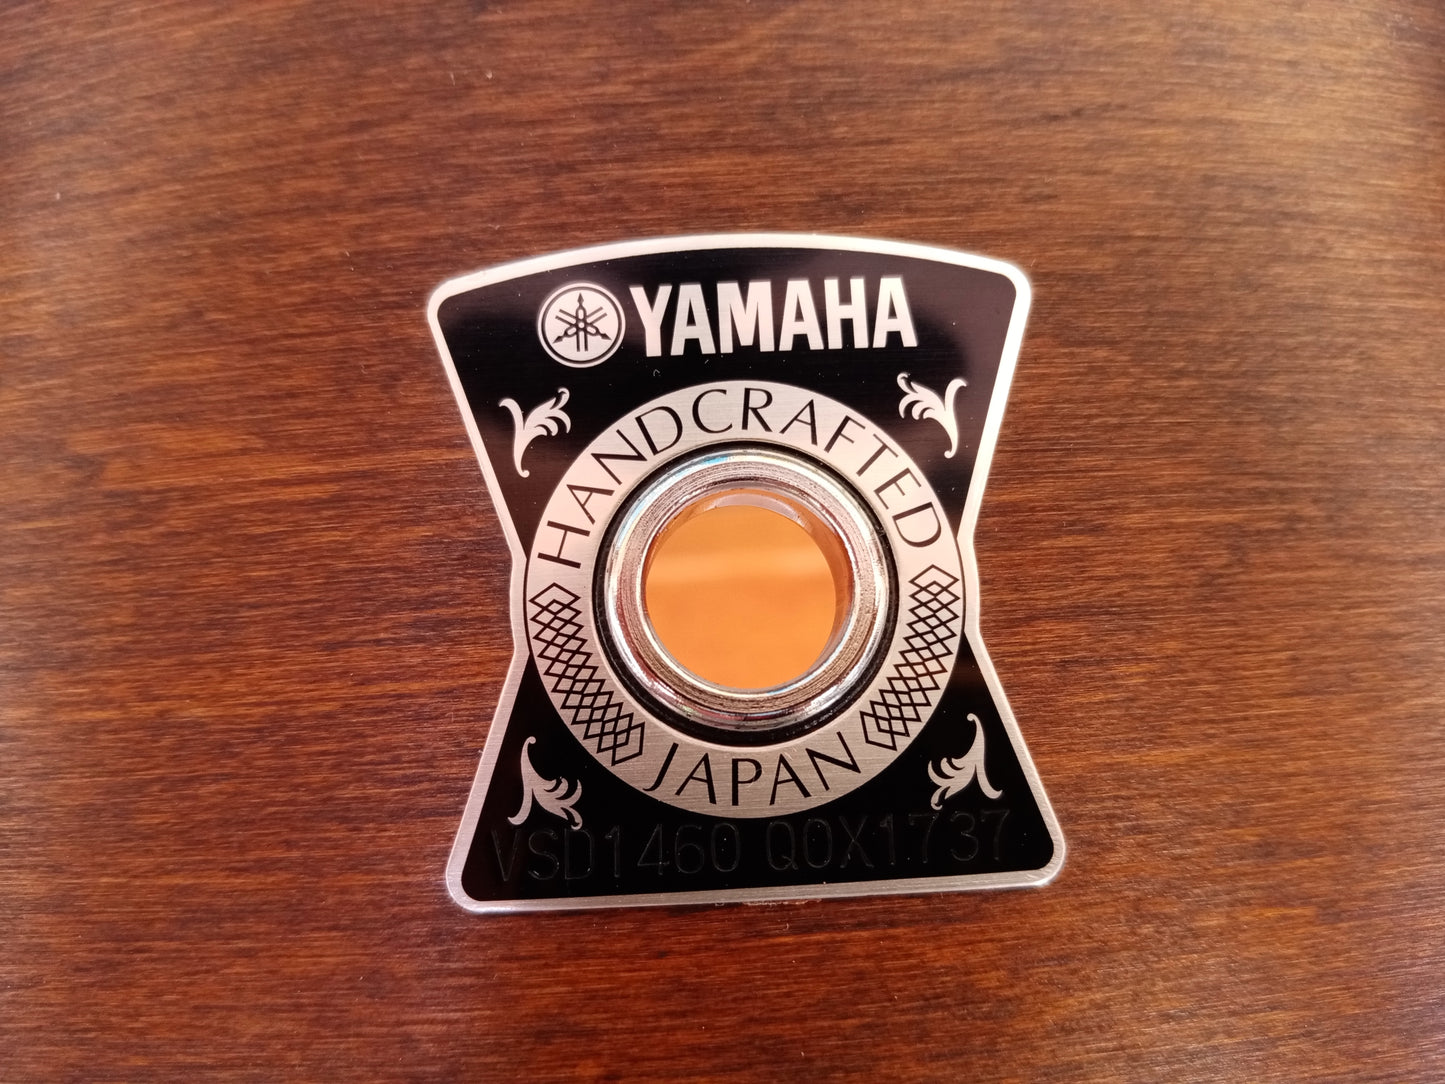 YAMAHA VSD1460VB, used snare drum.